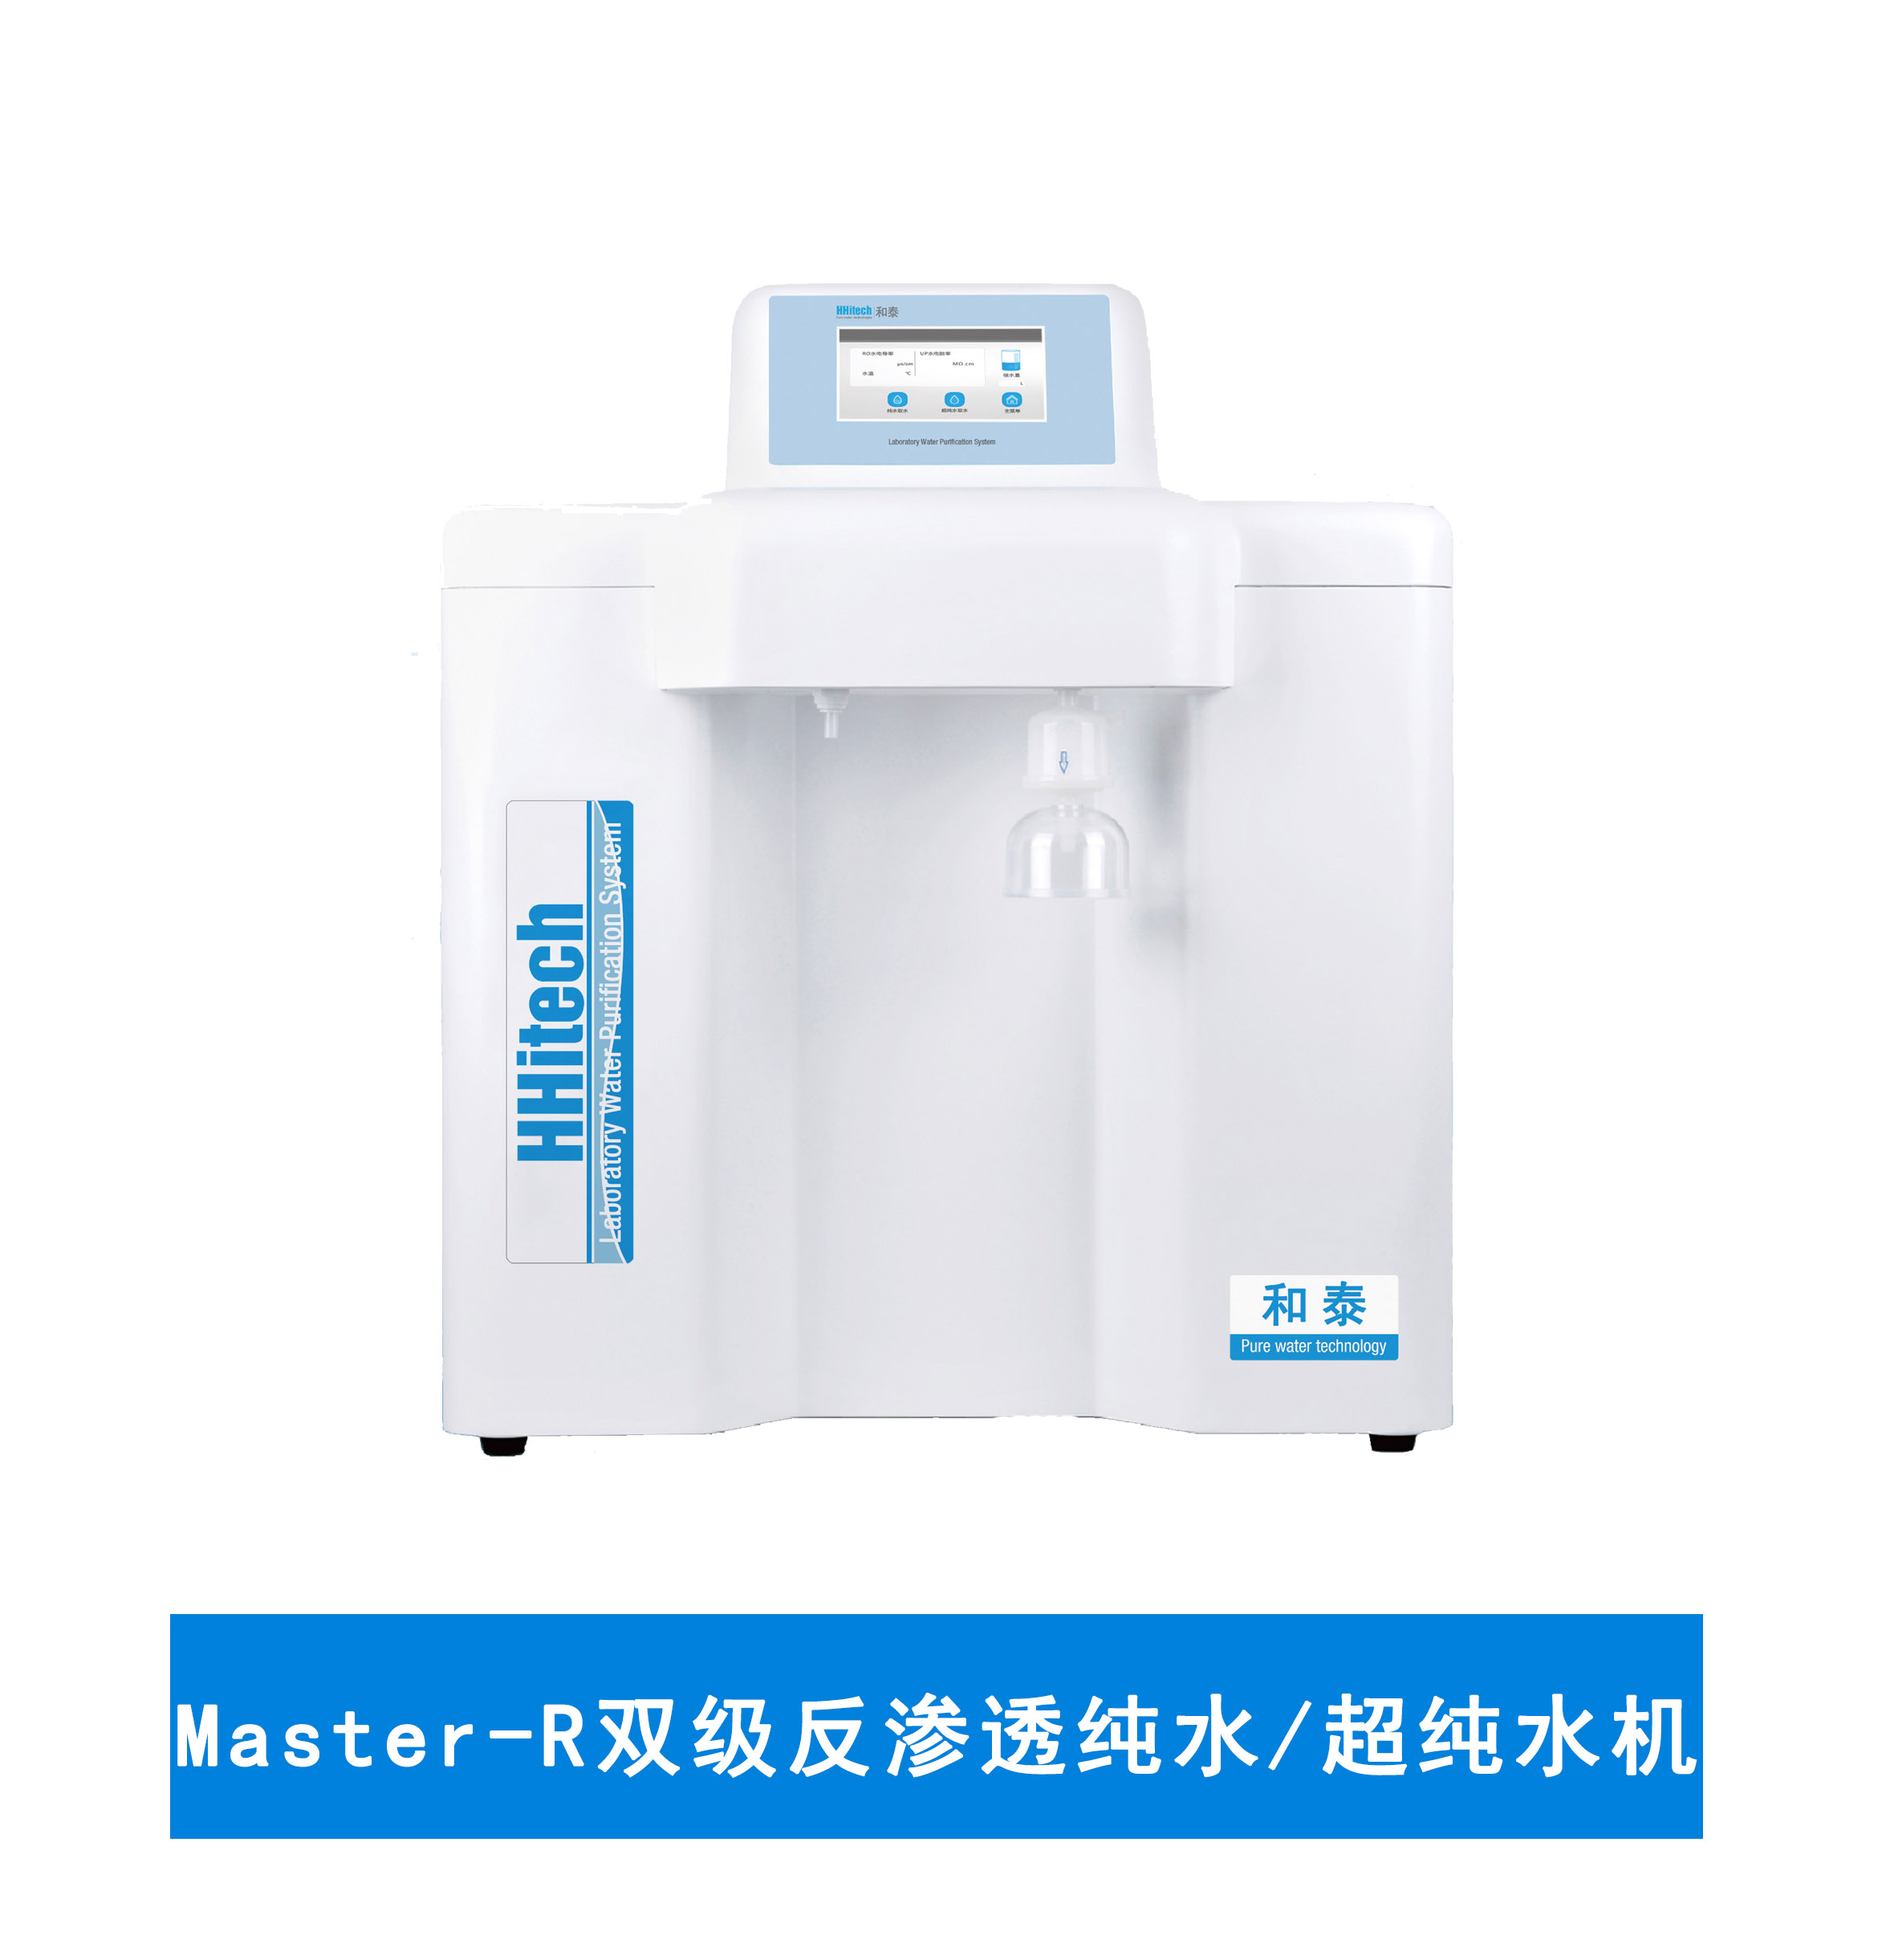 Master-R雙級反滲透純水/超純水機